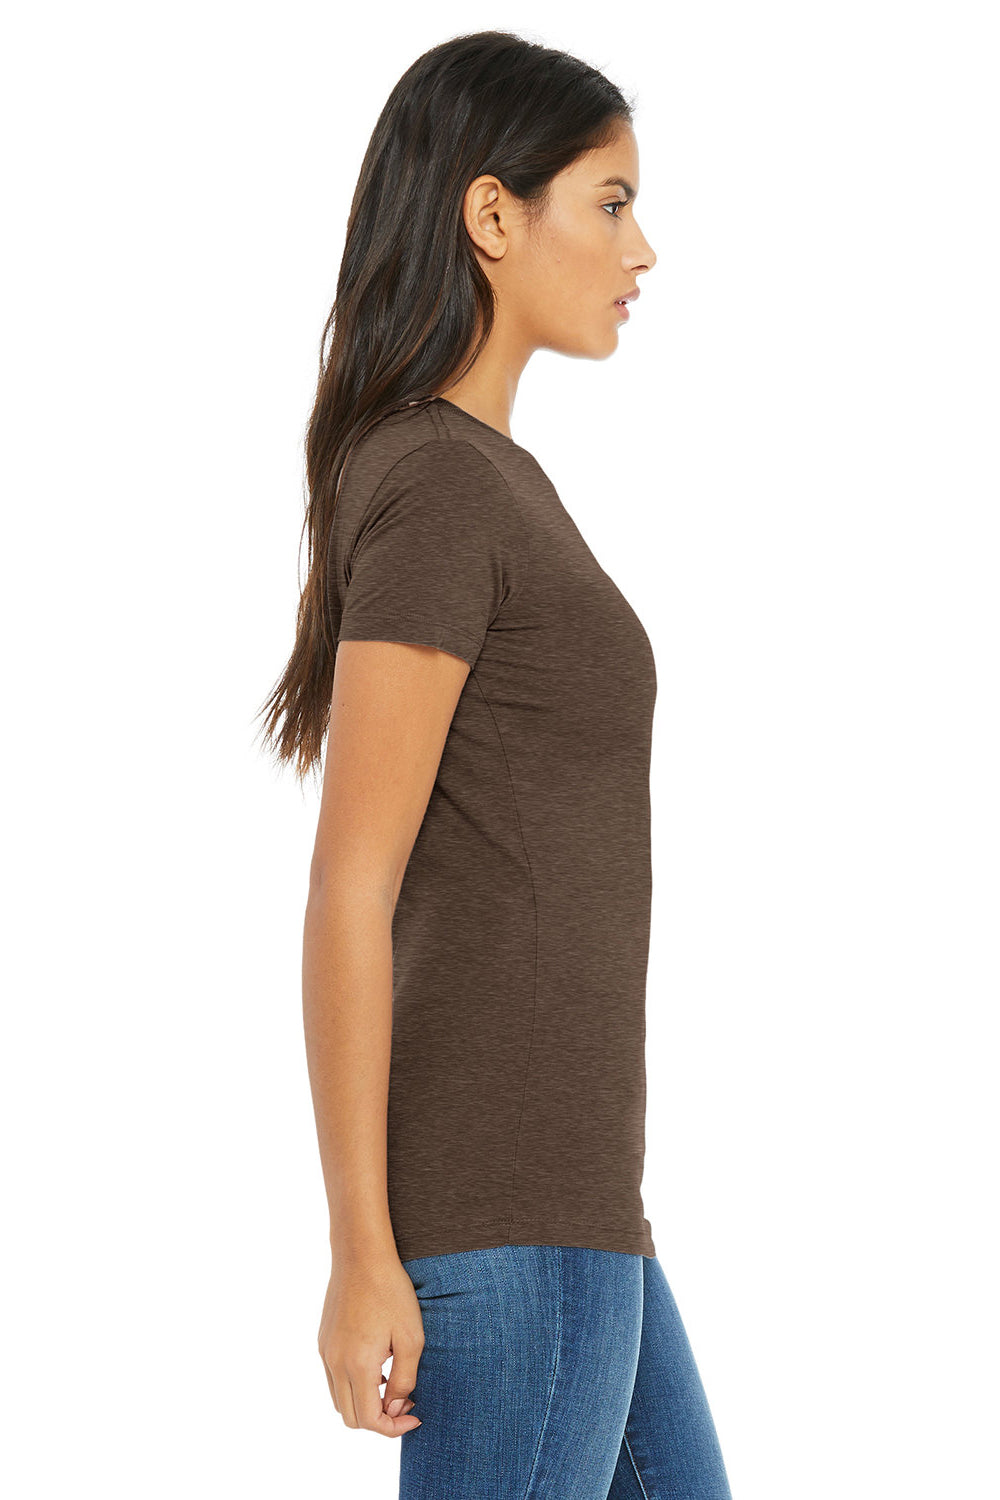 Bella + Canvas BC6004/6004 Womens The Favorite Short Sleeve Crewneck T-Shirt Heather Brown Model Side